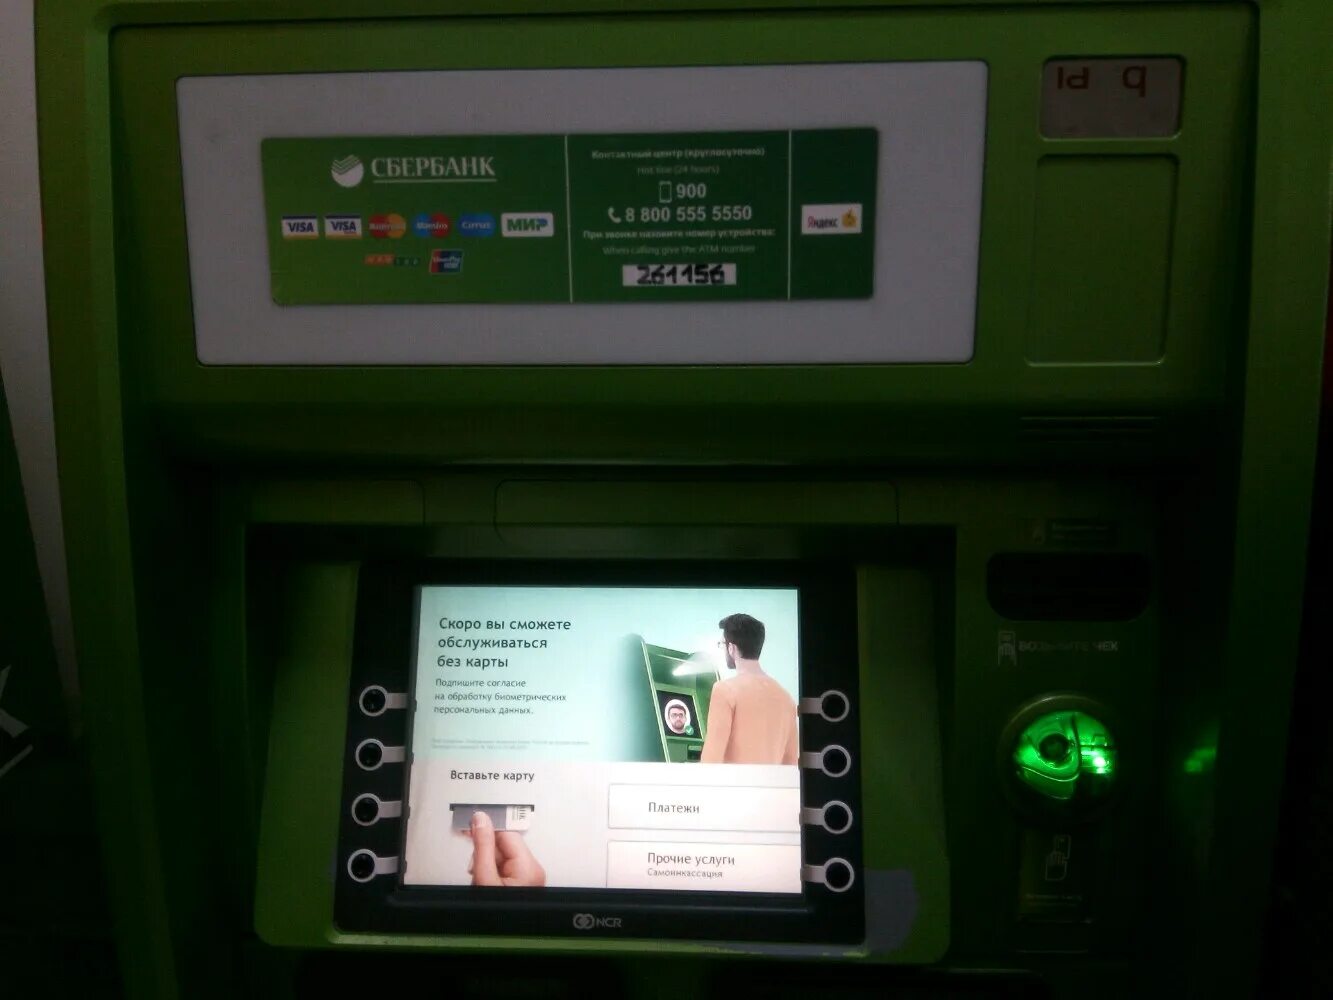 Банкоматы сбербанка в метро. Экран банкомата. Банкомат Сбербанка. Экран банкомата Сбербанка. Сбербанк раздел банкоматы.